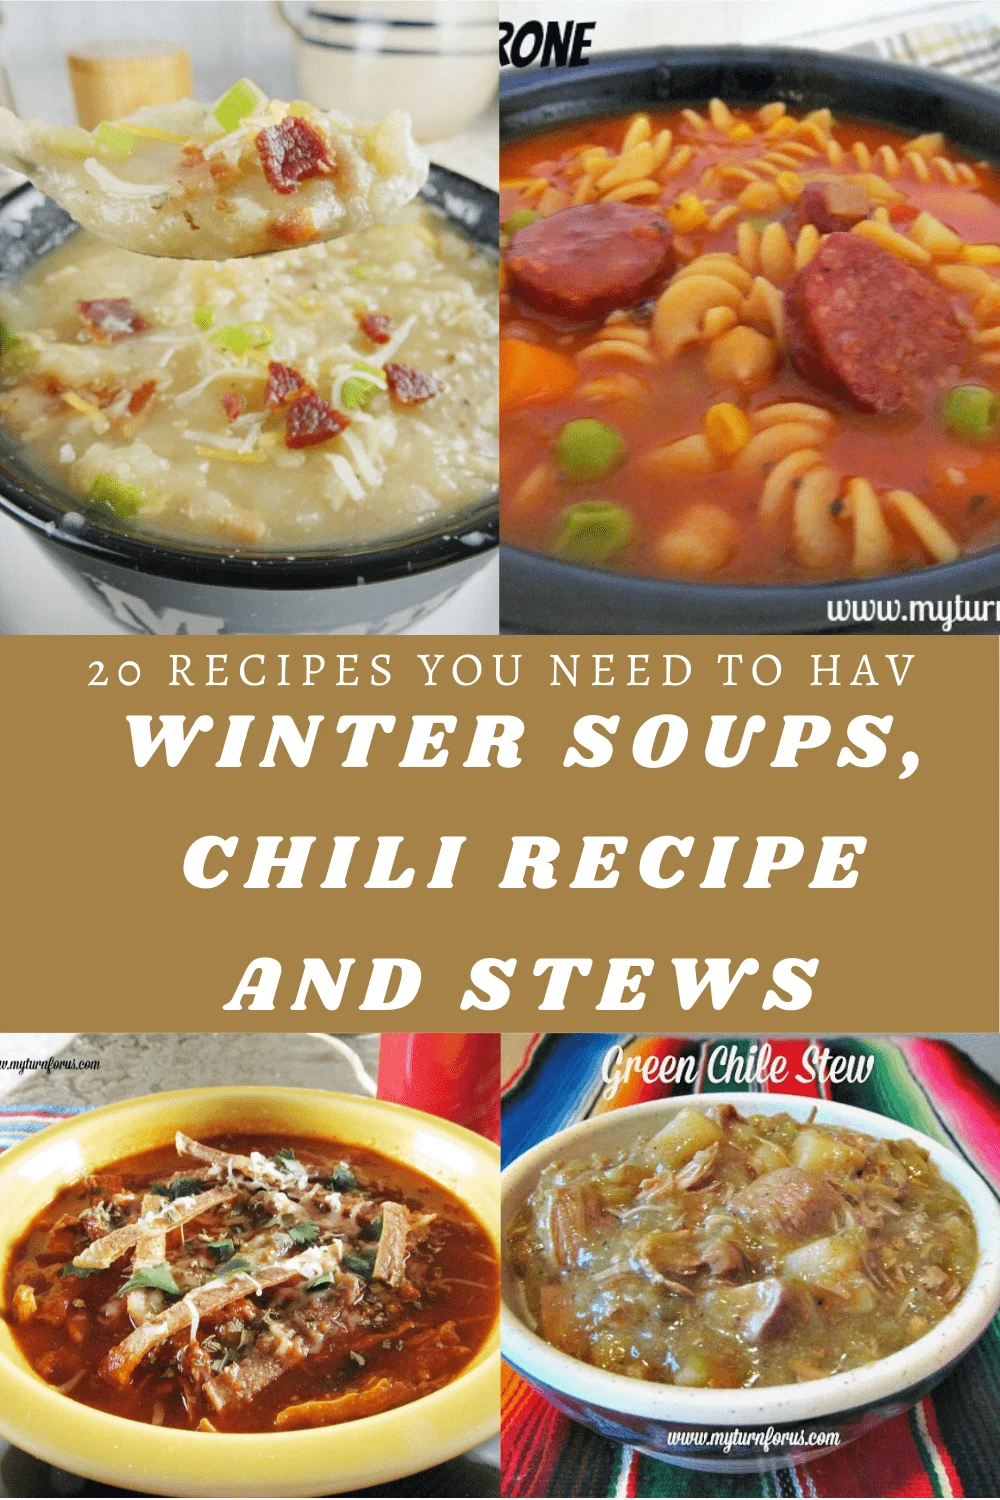 soup recipes, stew recipes and chili recipes